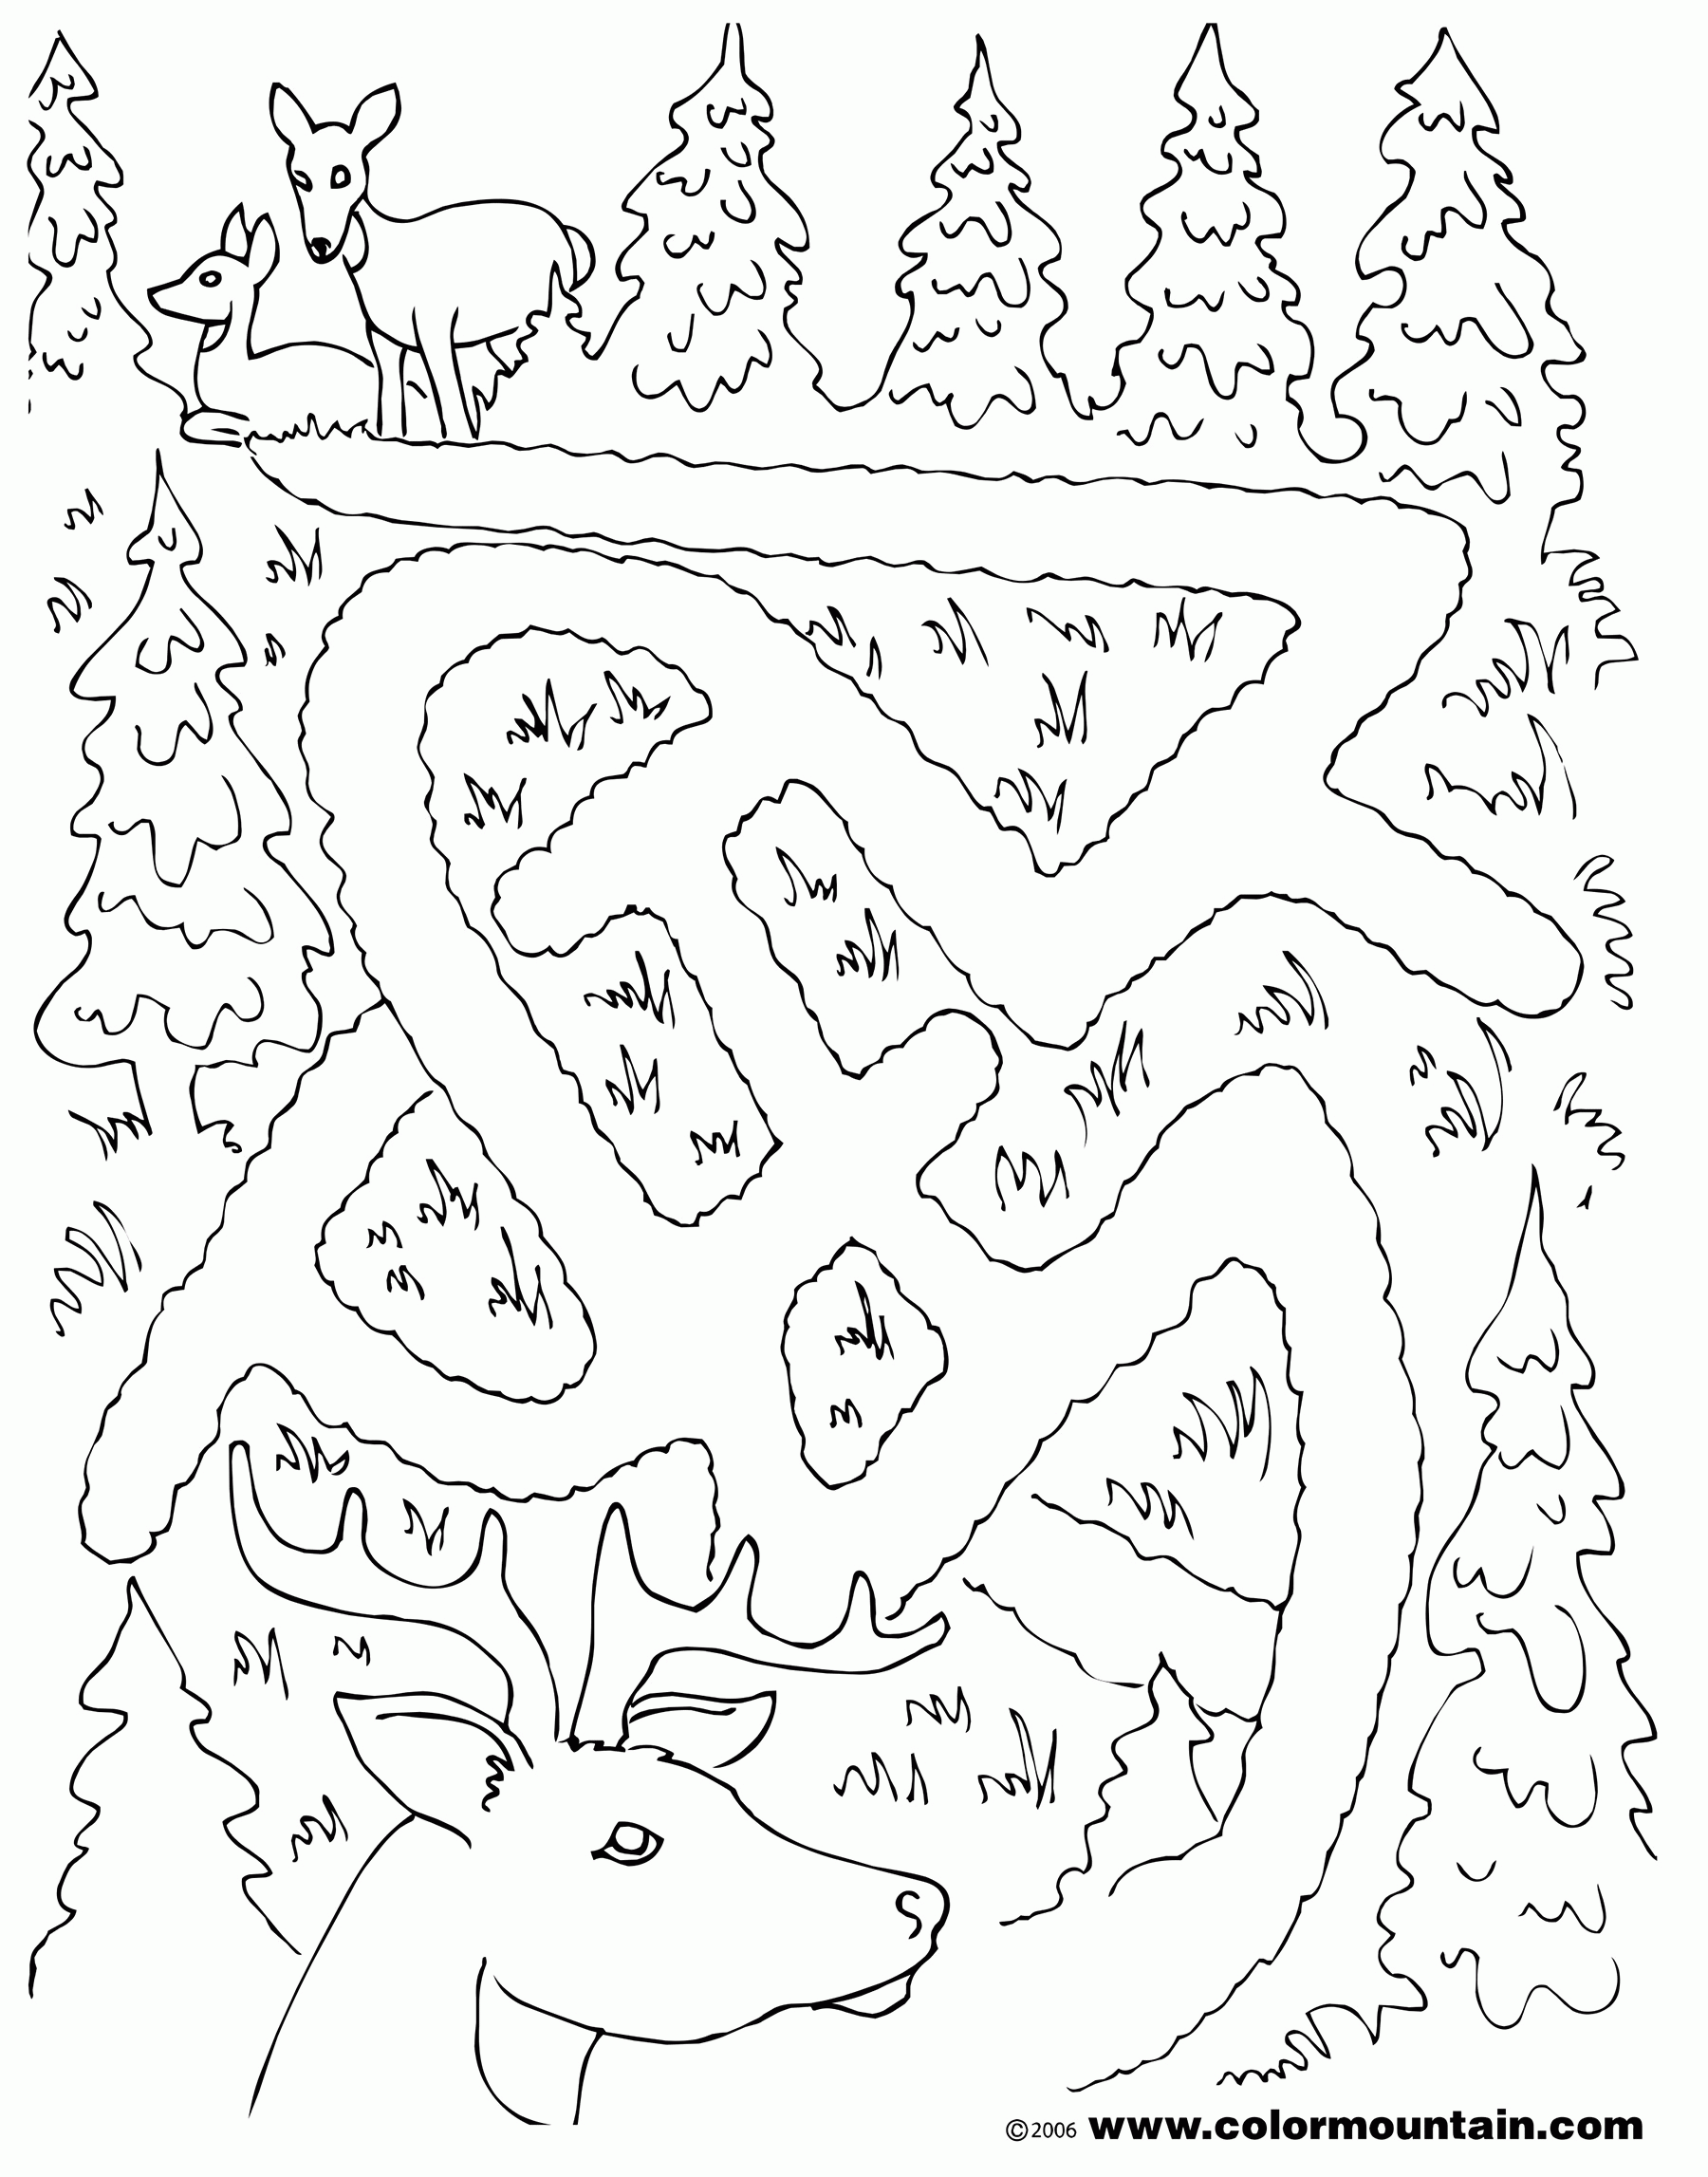 Deer Maze Activity Coloring Sheet - Create A Printout Or Activity